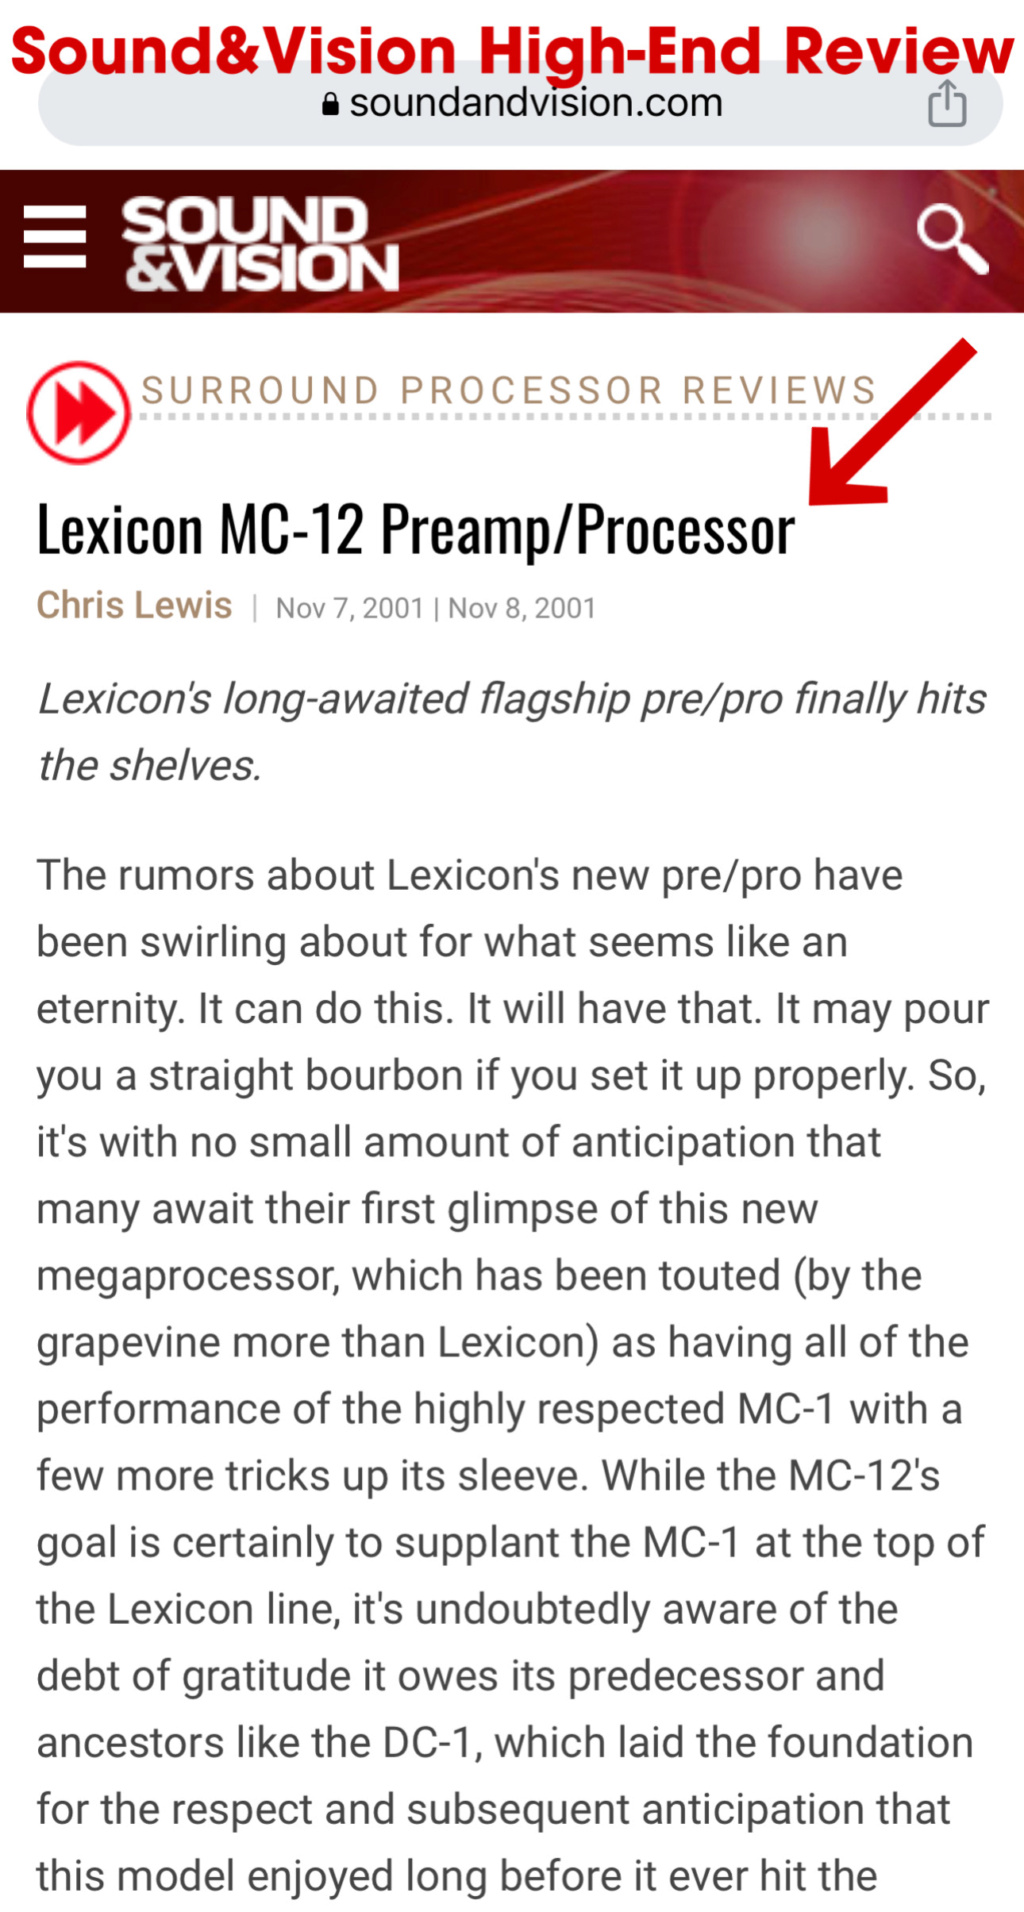 Lexicon MC-12 Preamp/Processor Balance Version(XLR) THX Music&Cinema DTS Surround,Logic7 Processor 26a53910